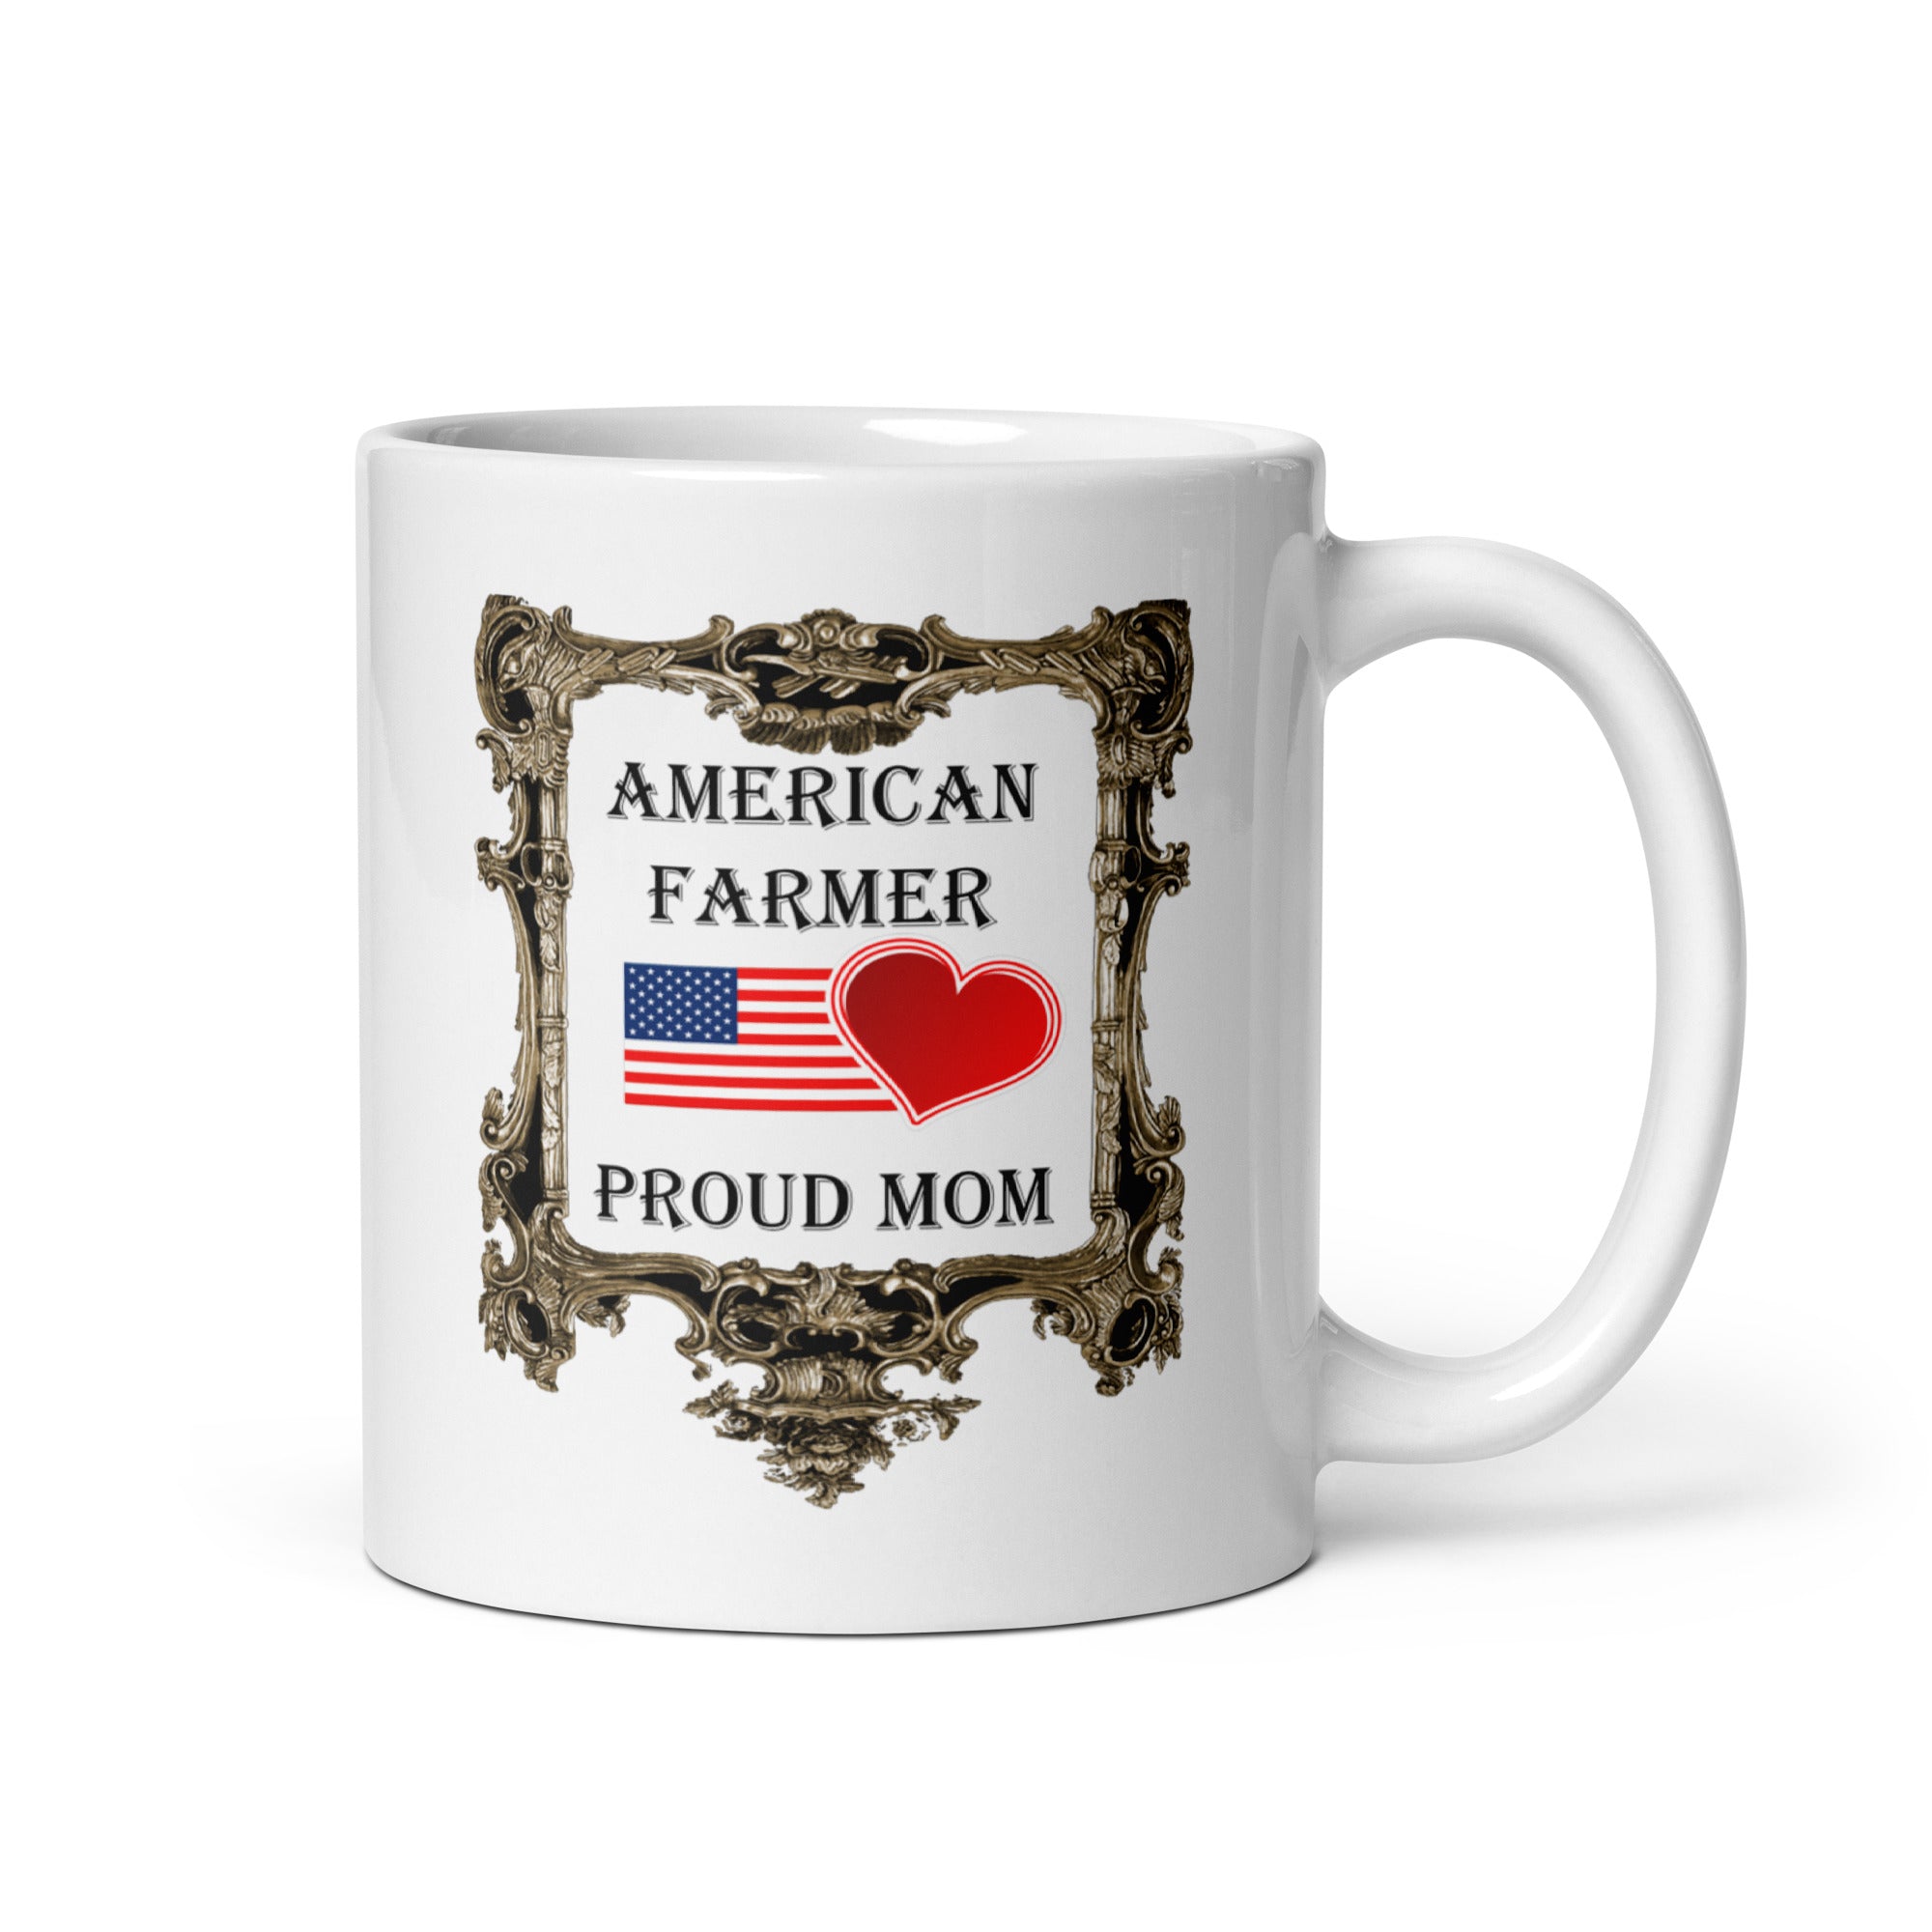 American Farmer - Proud Mom White Glossy Mug